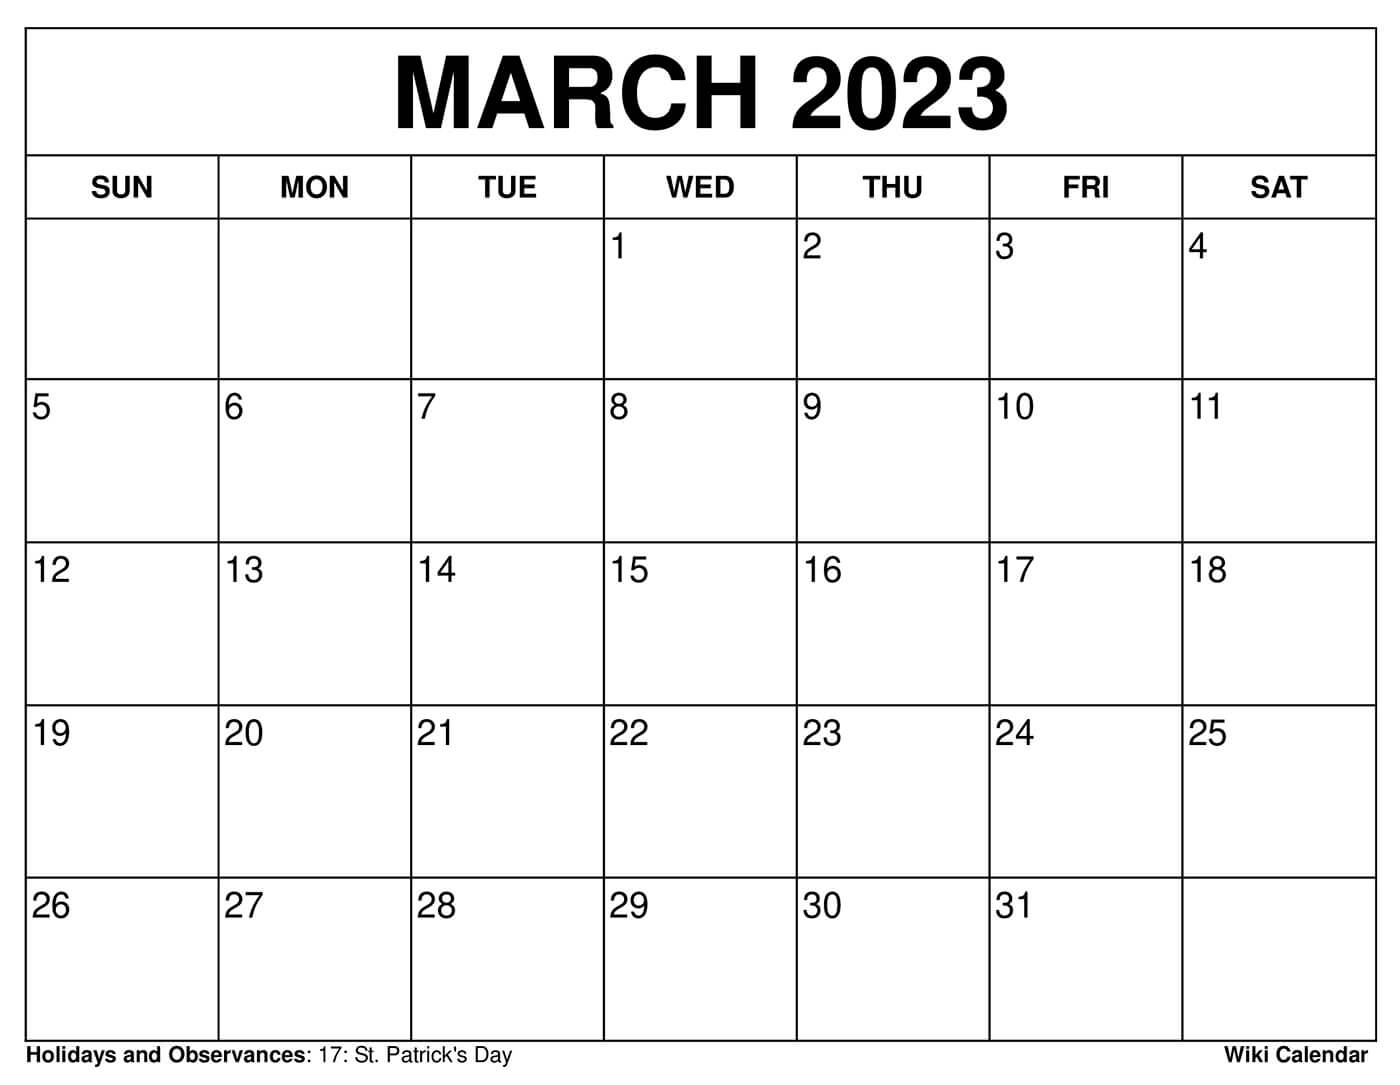 March 2022 Free Printable Calendar Free Printable March 2022 Calendars - Wiki Calendar